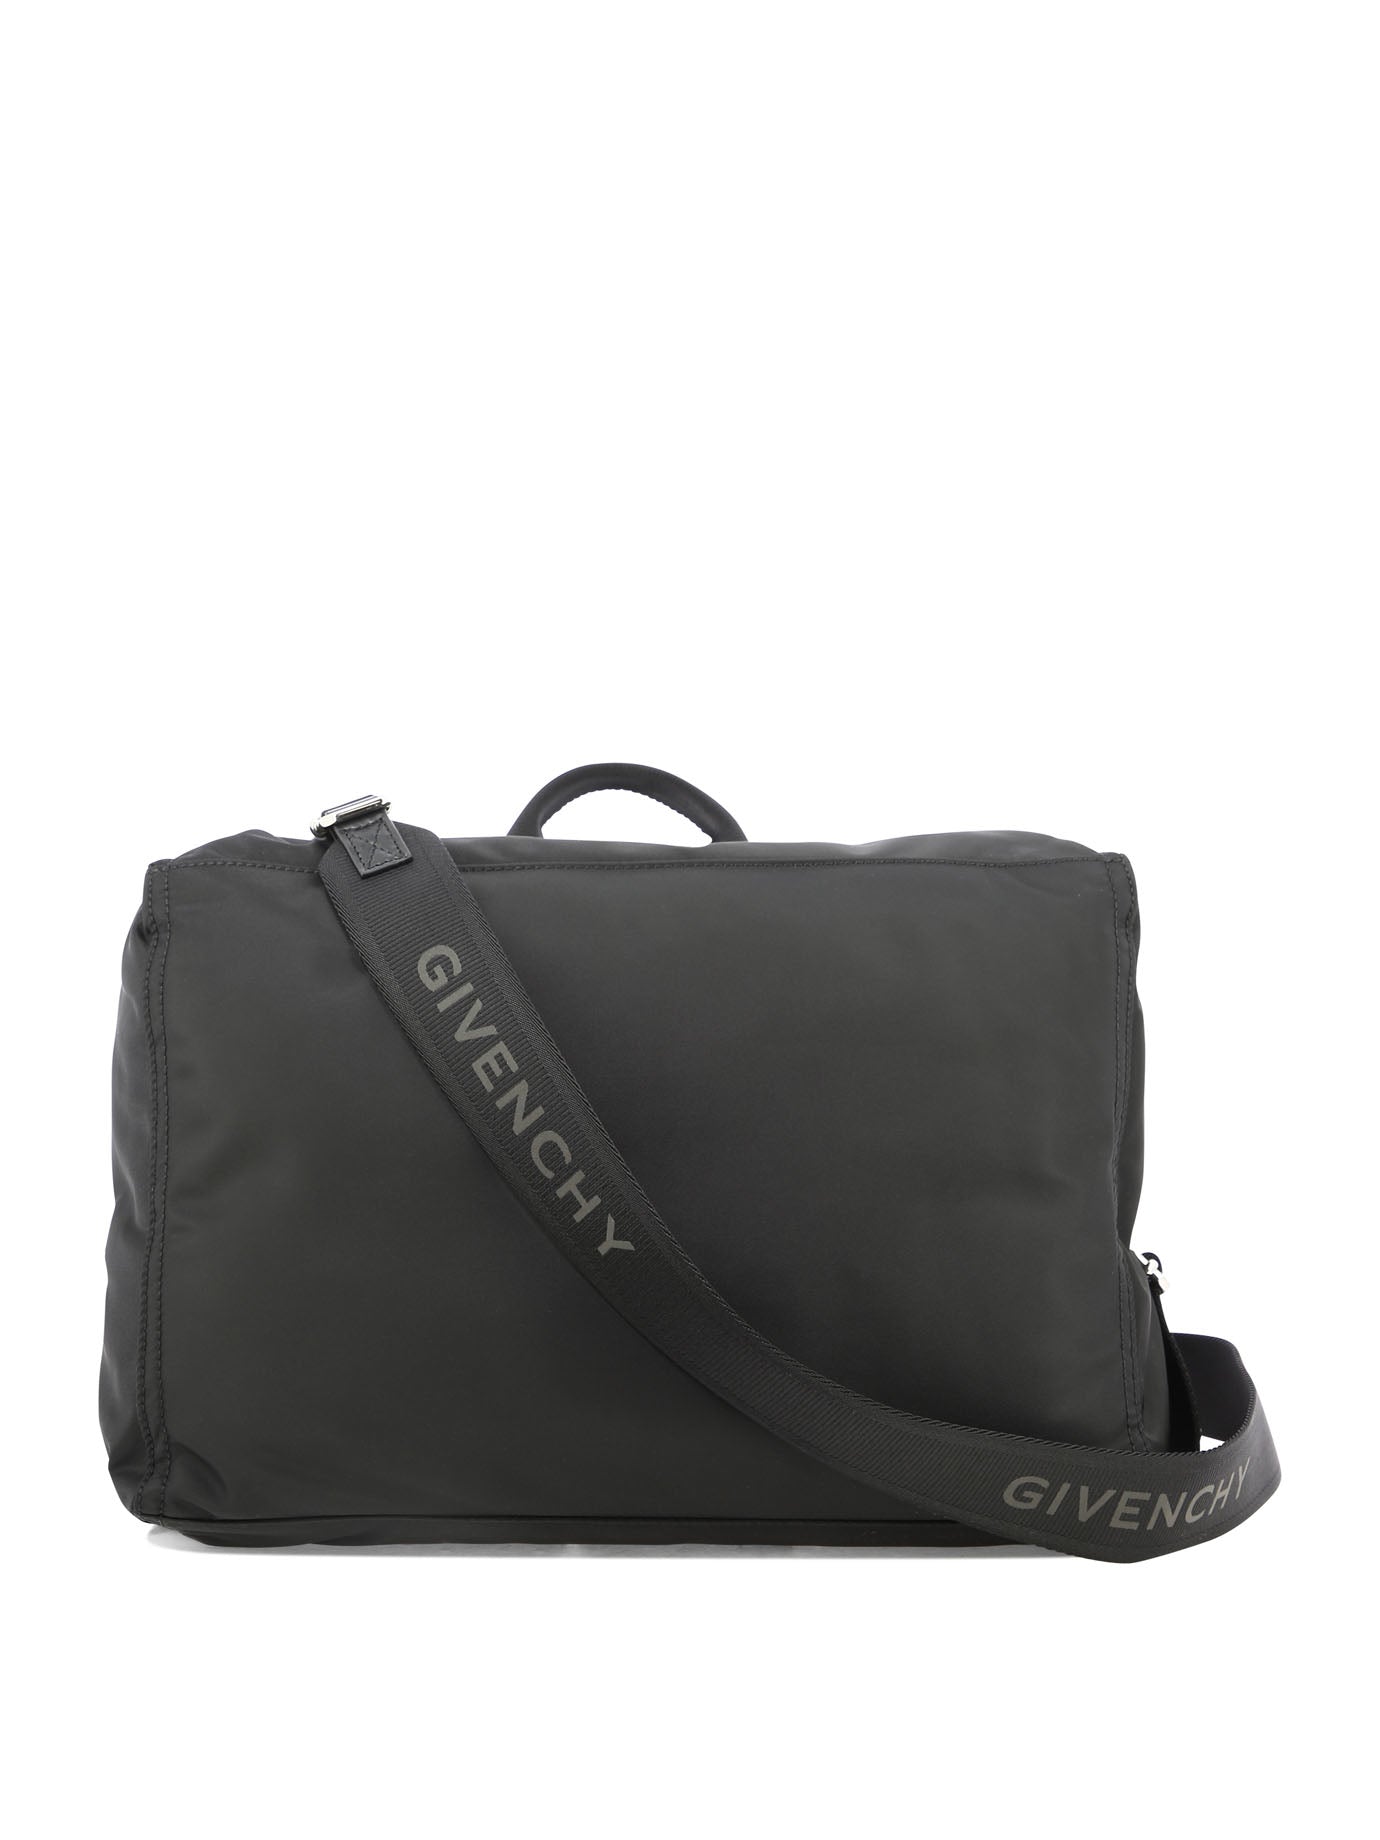 Givenchy Medium Pandora Crossbody Bag In Black